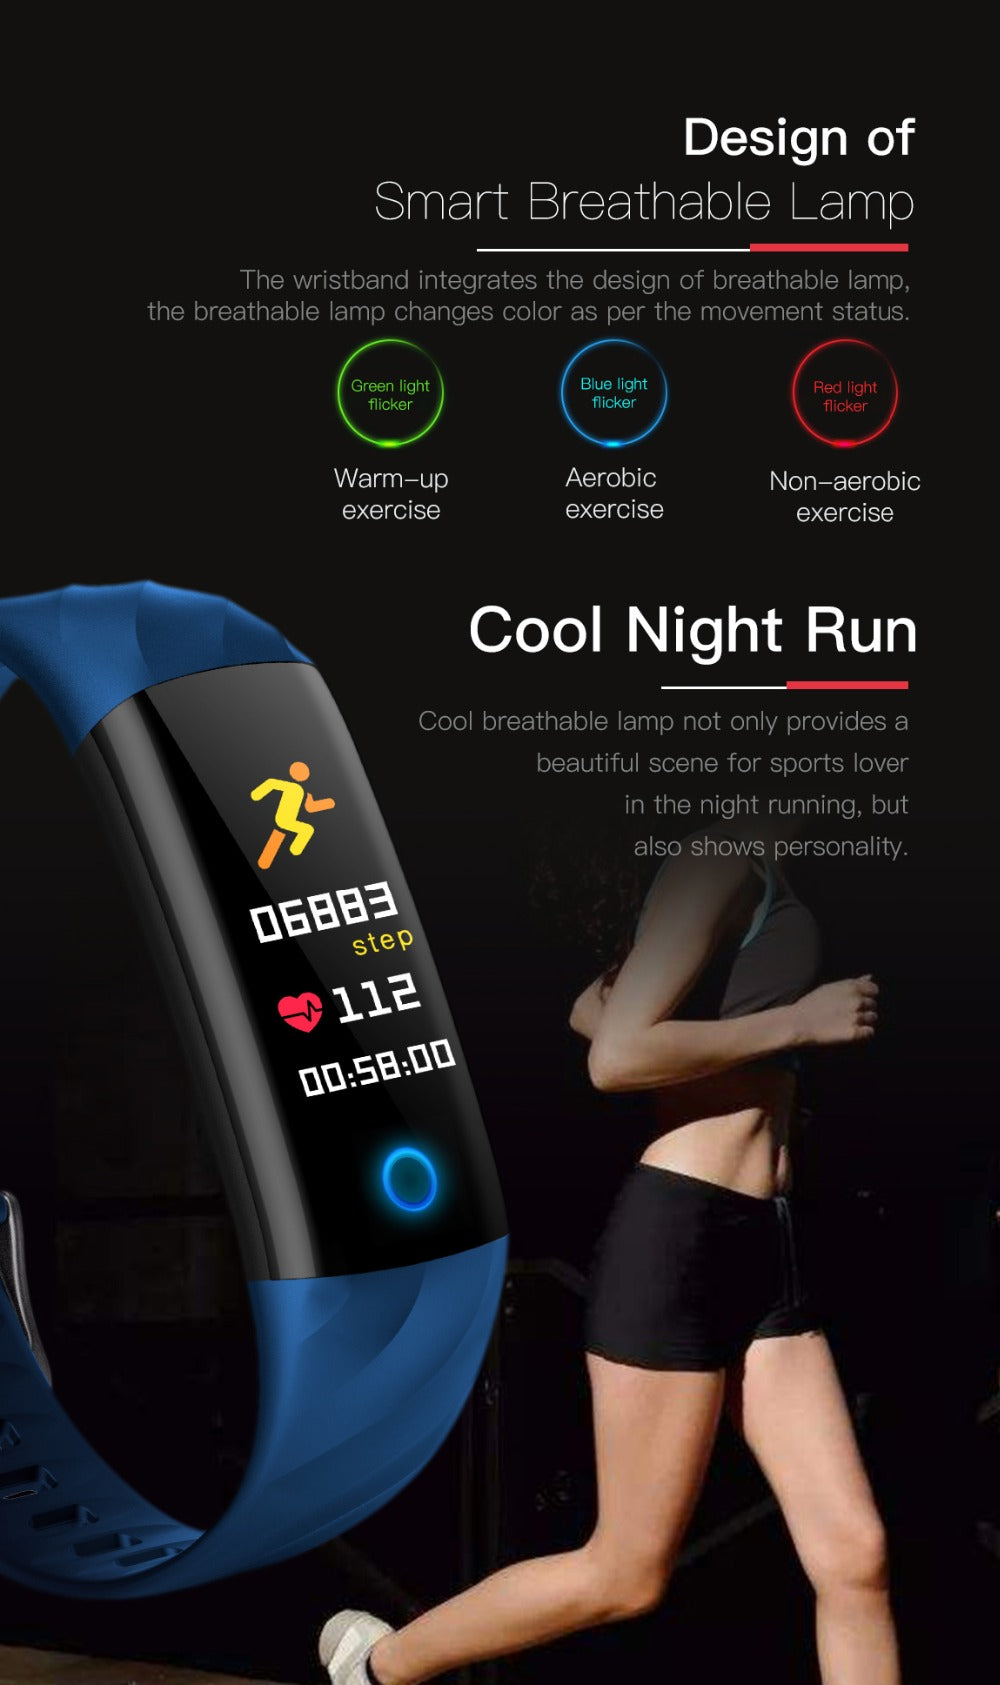 Smart Fitness Tracker Wristband Watch